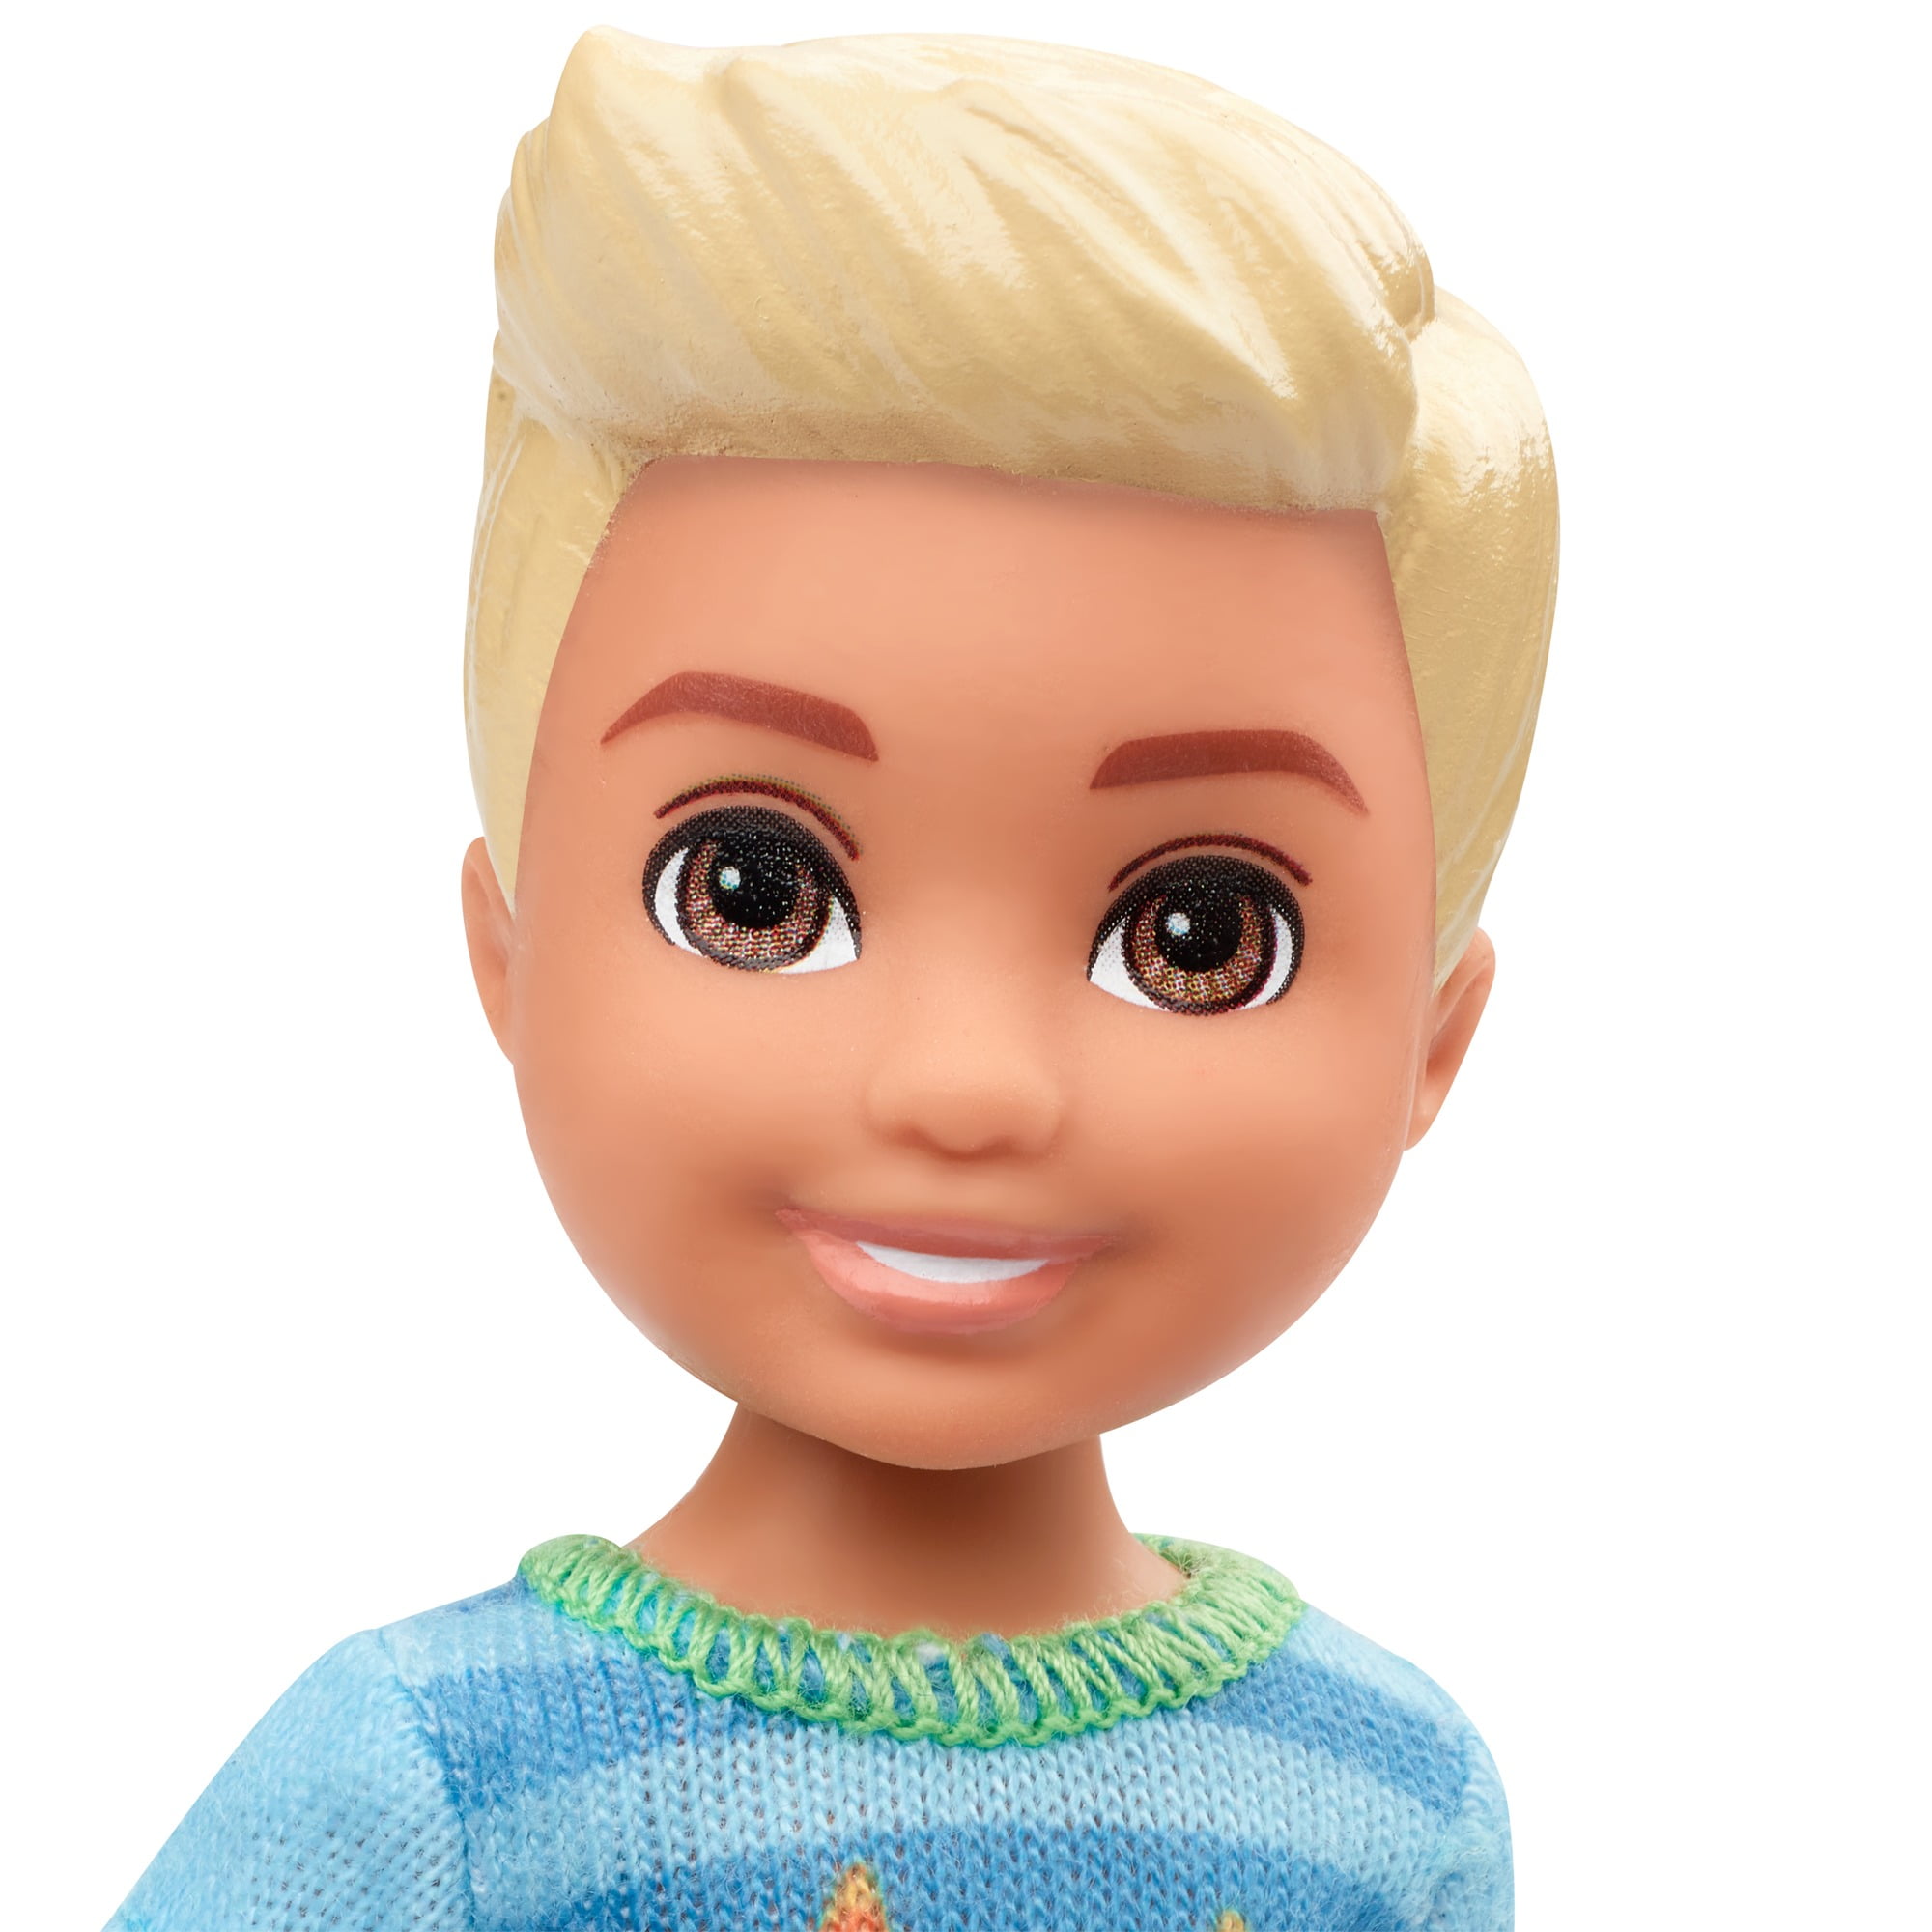 Buy Barbie Club Chelsea Boy Doll (6-inch Blonde) Wearing Monster-Themed ...